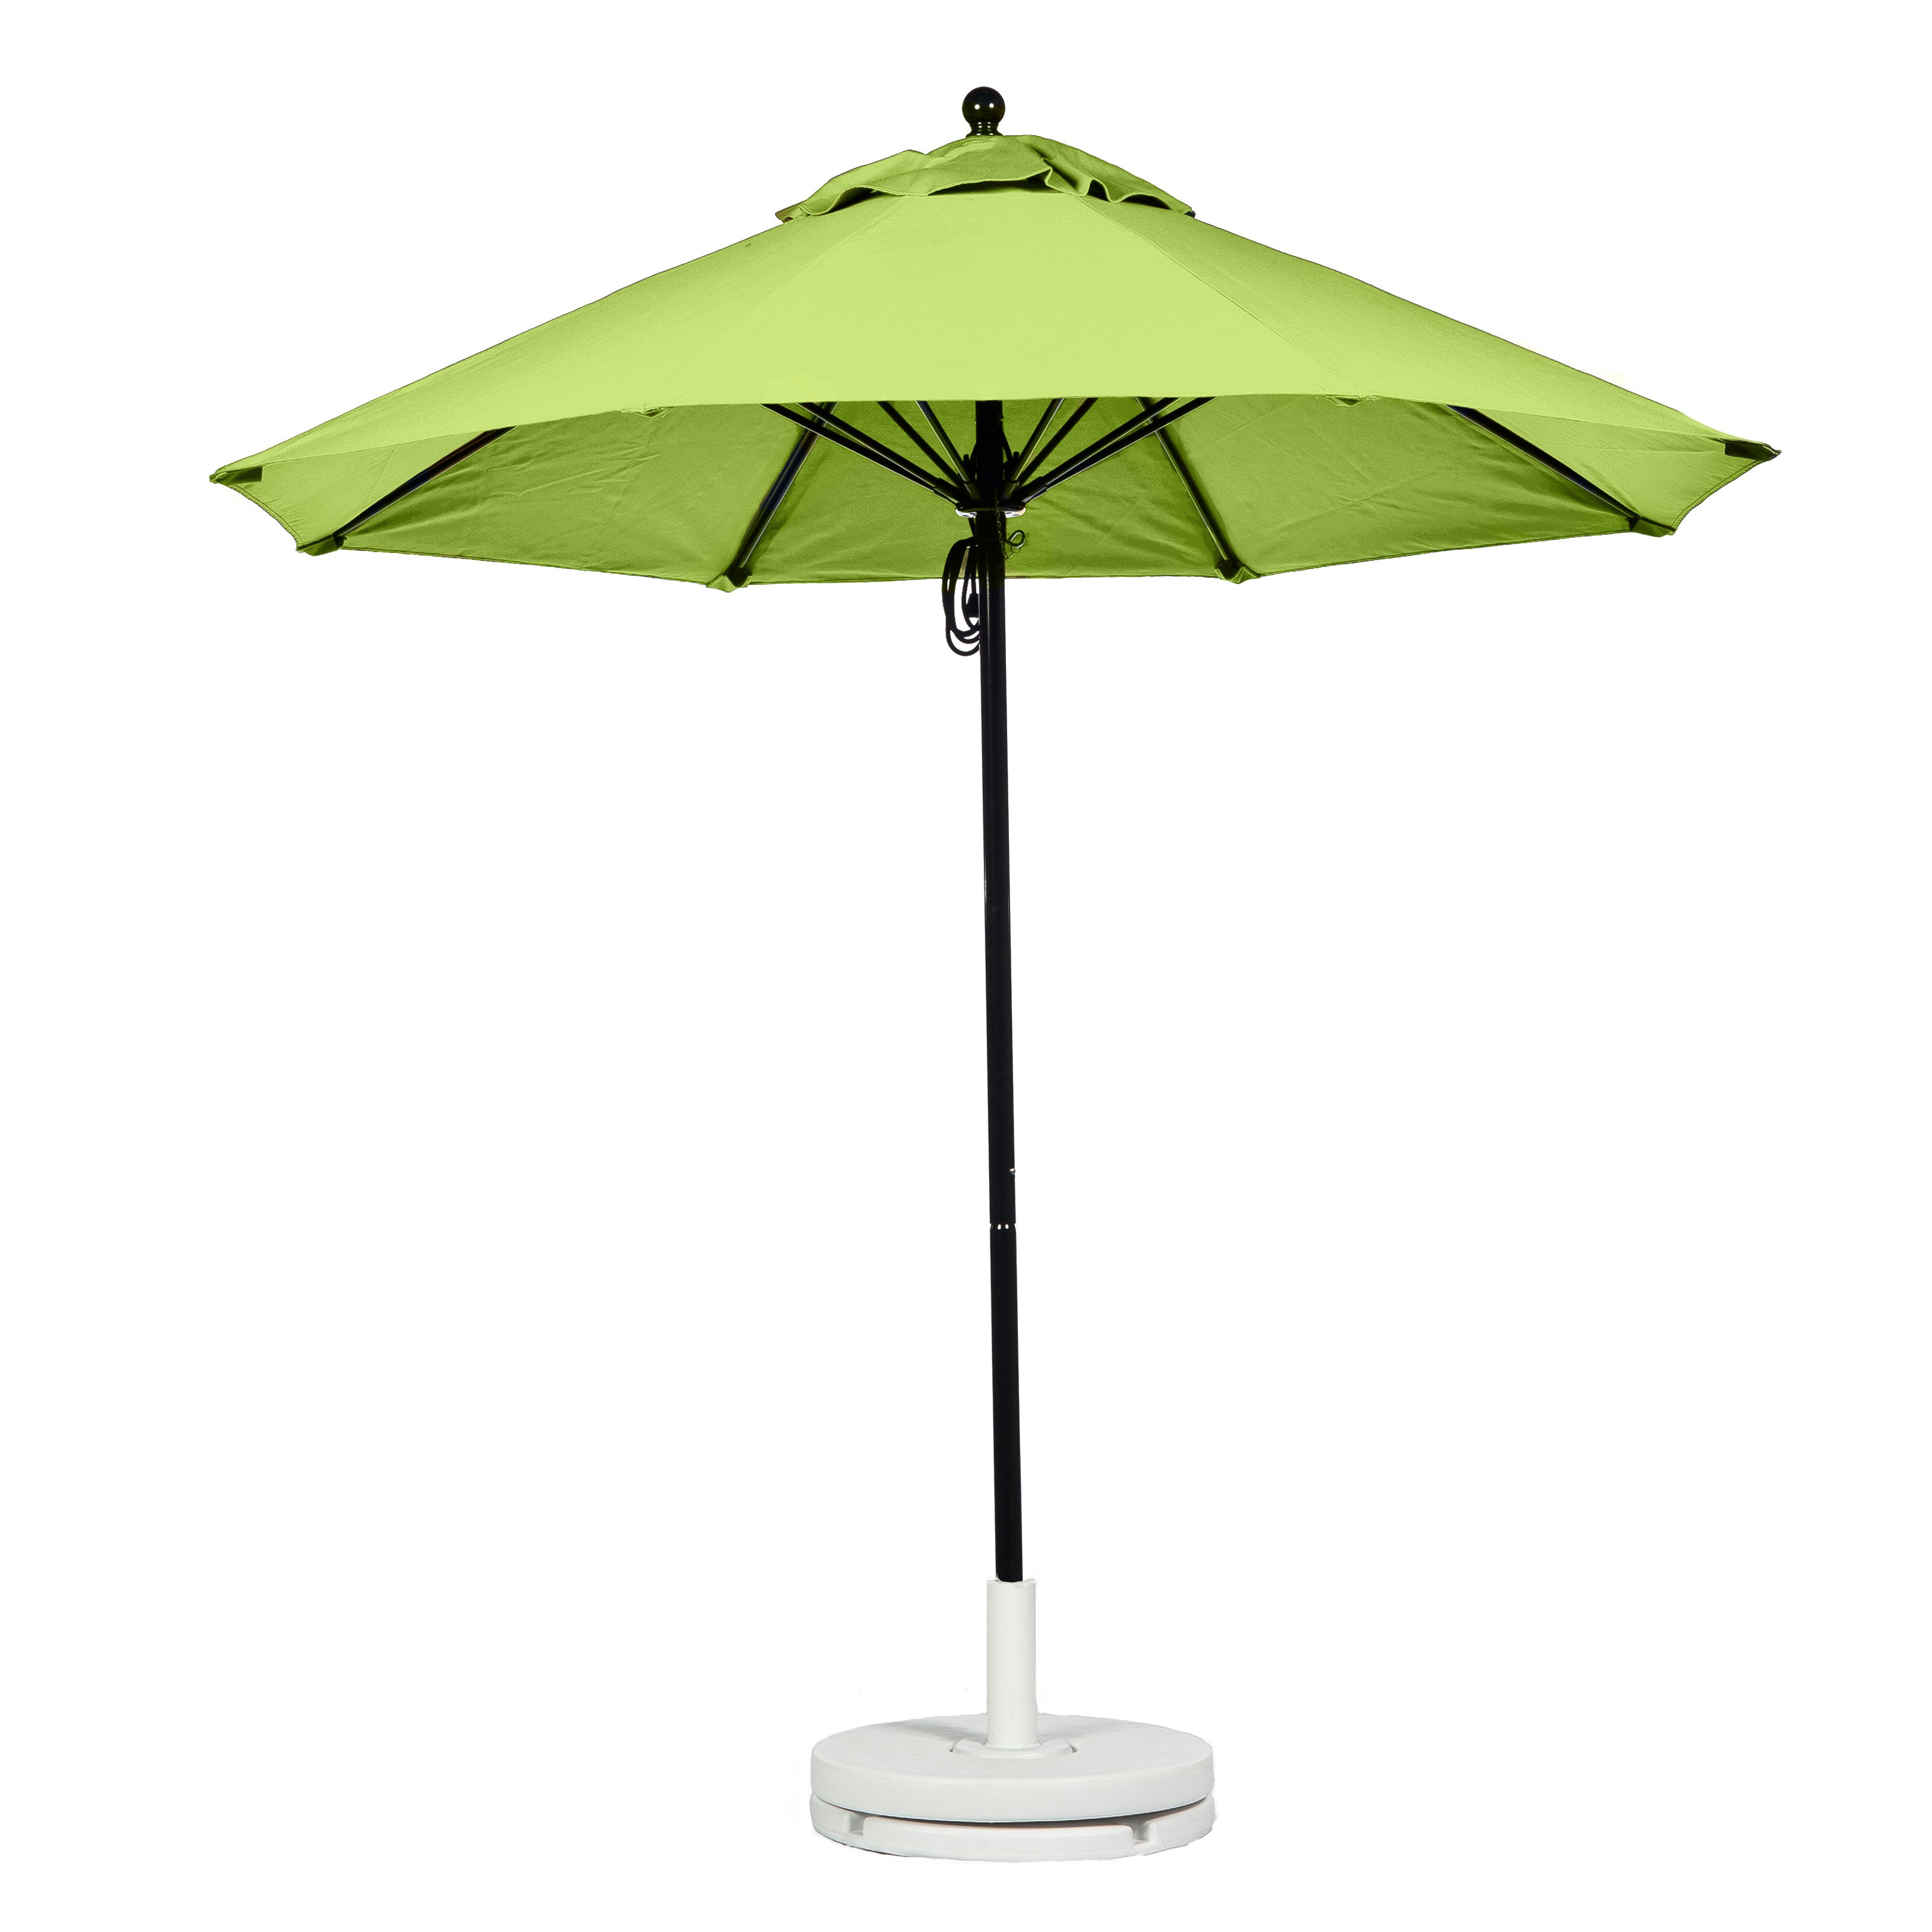 Best ideas about Black Patio Umbrella
. Save or Pin 7539 Black Hexagon Garden Umbrella Bronze Finish Led Patio Now.